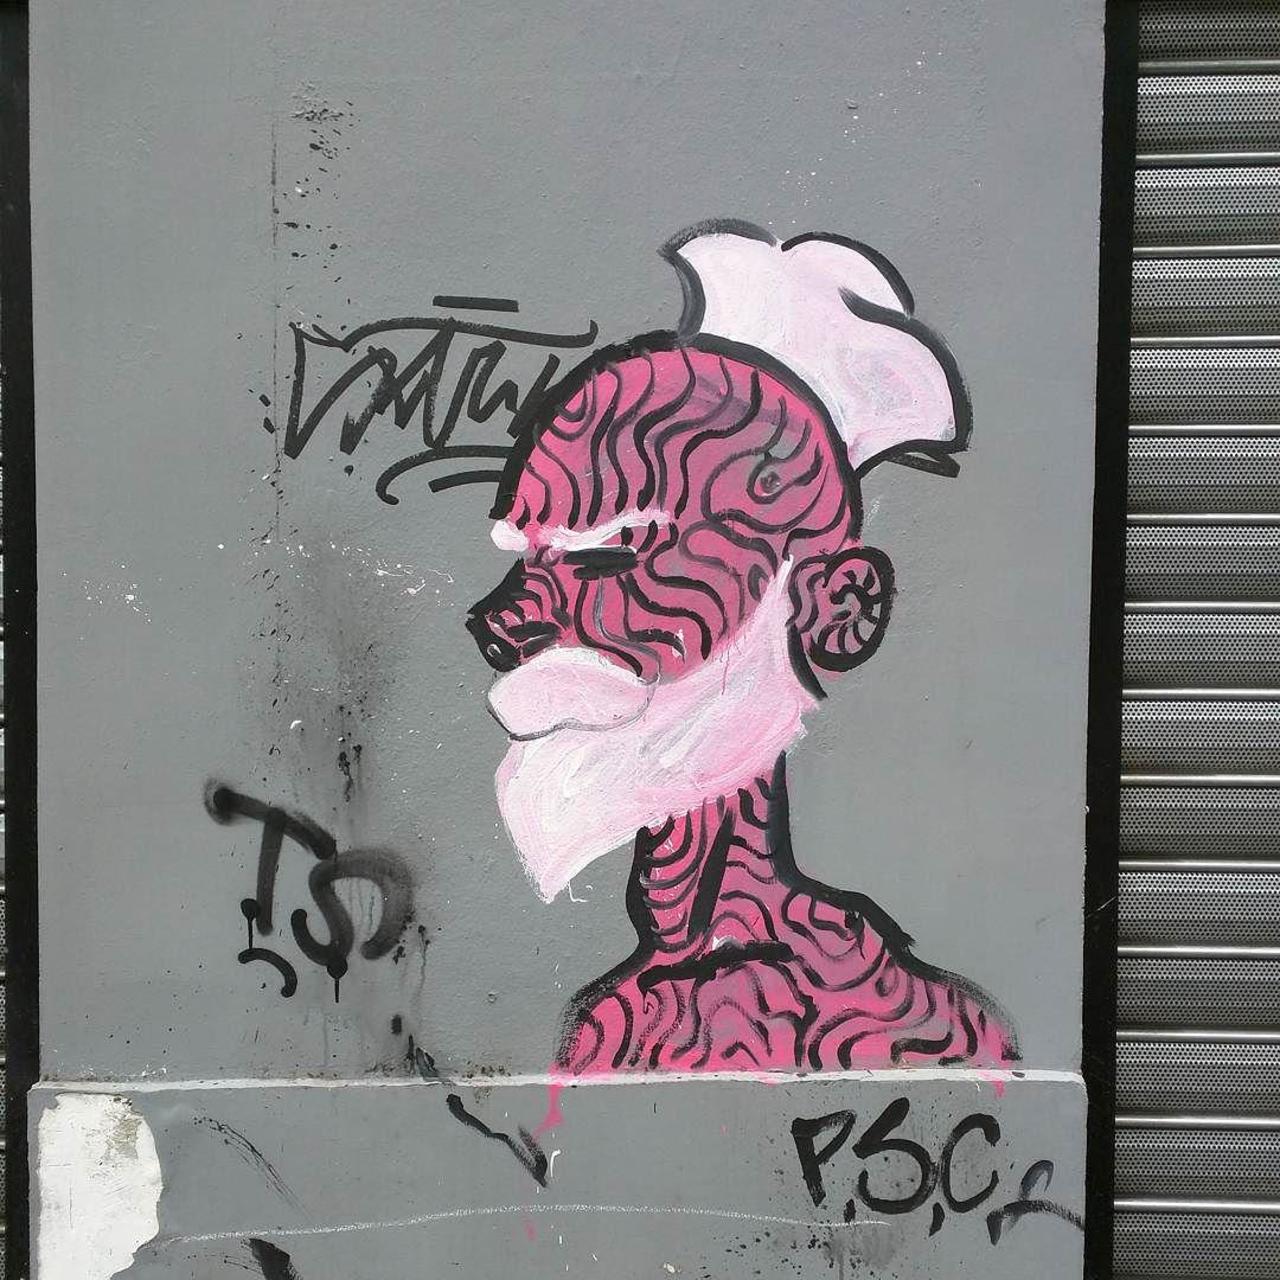 #Paris #graffiti photo by @alphaquadra http://ift.tt/1Pp8qw5 #StreetArt http://t.co/ecNe0aruyy